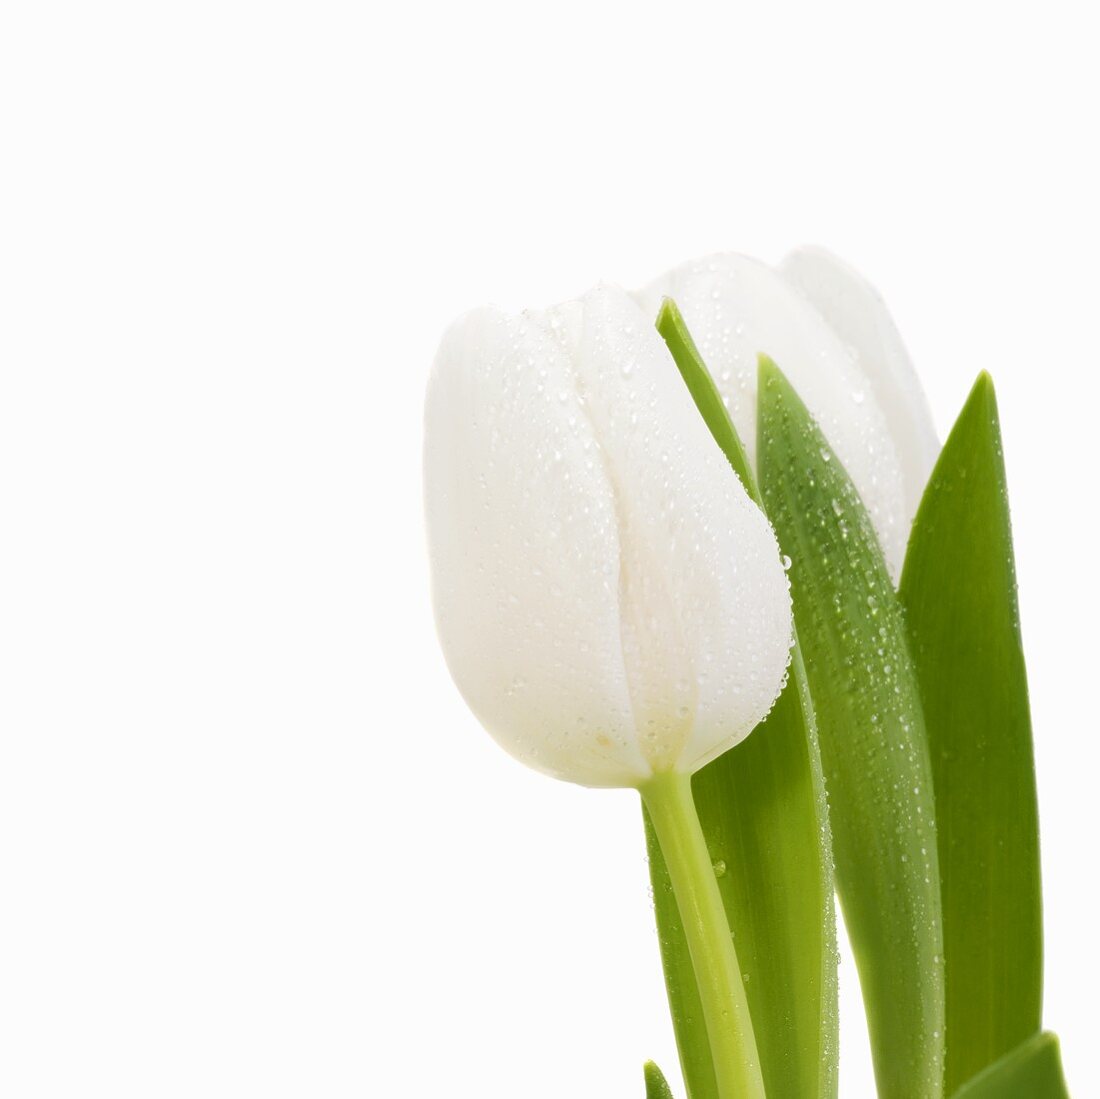 Tulip against white background